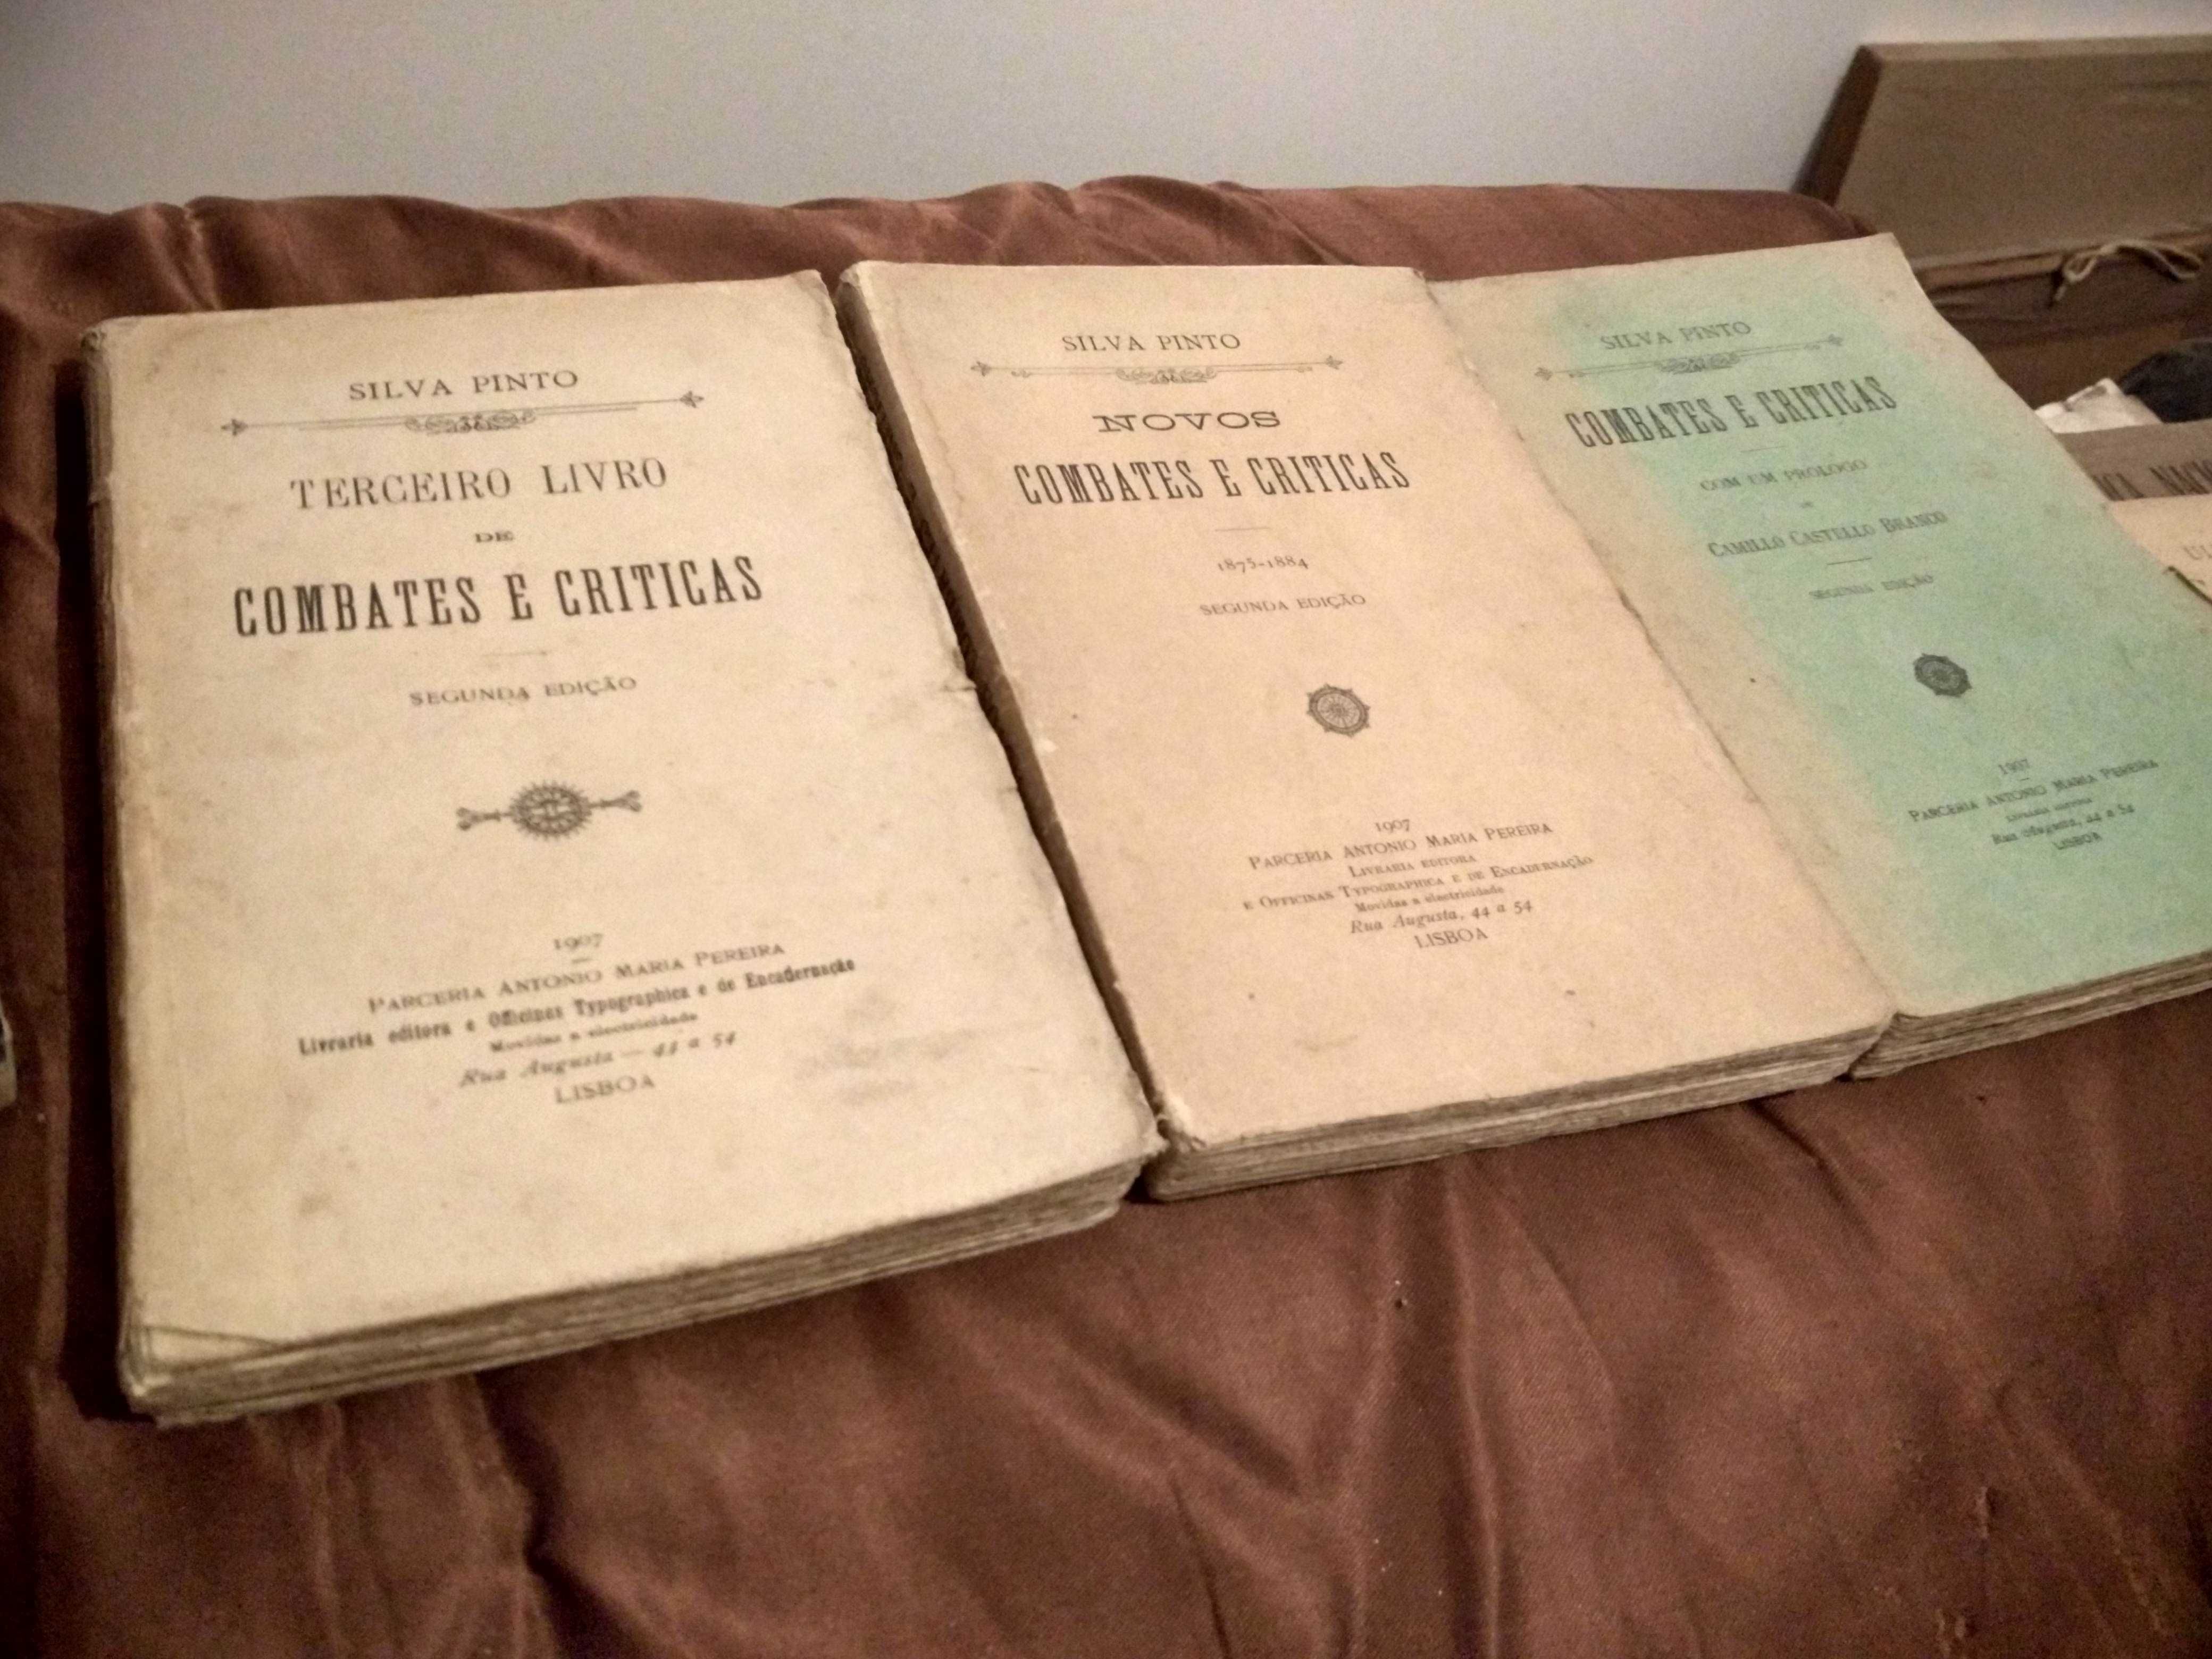 SILVA PINTO - COMBATES E CRITICAS - Completo, 3 Volumes